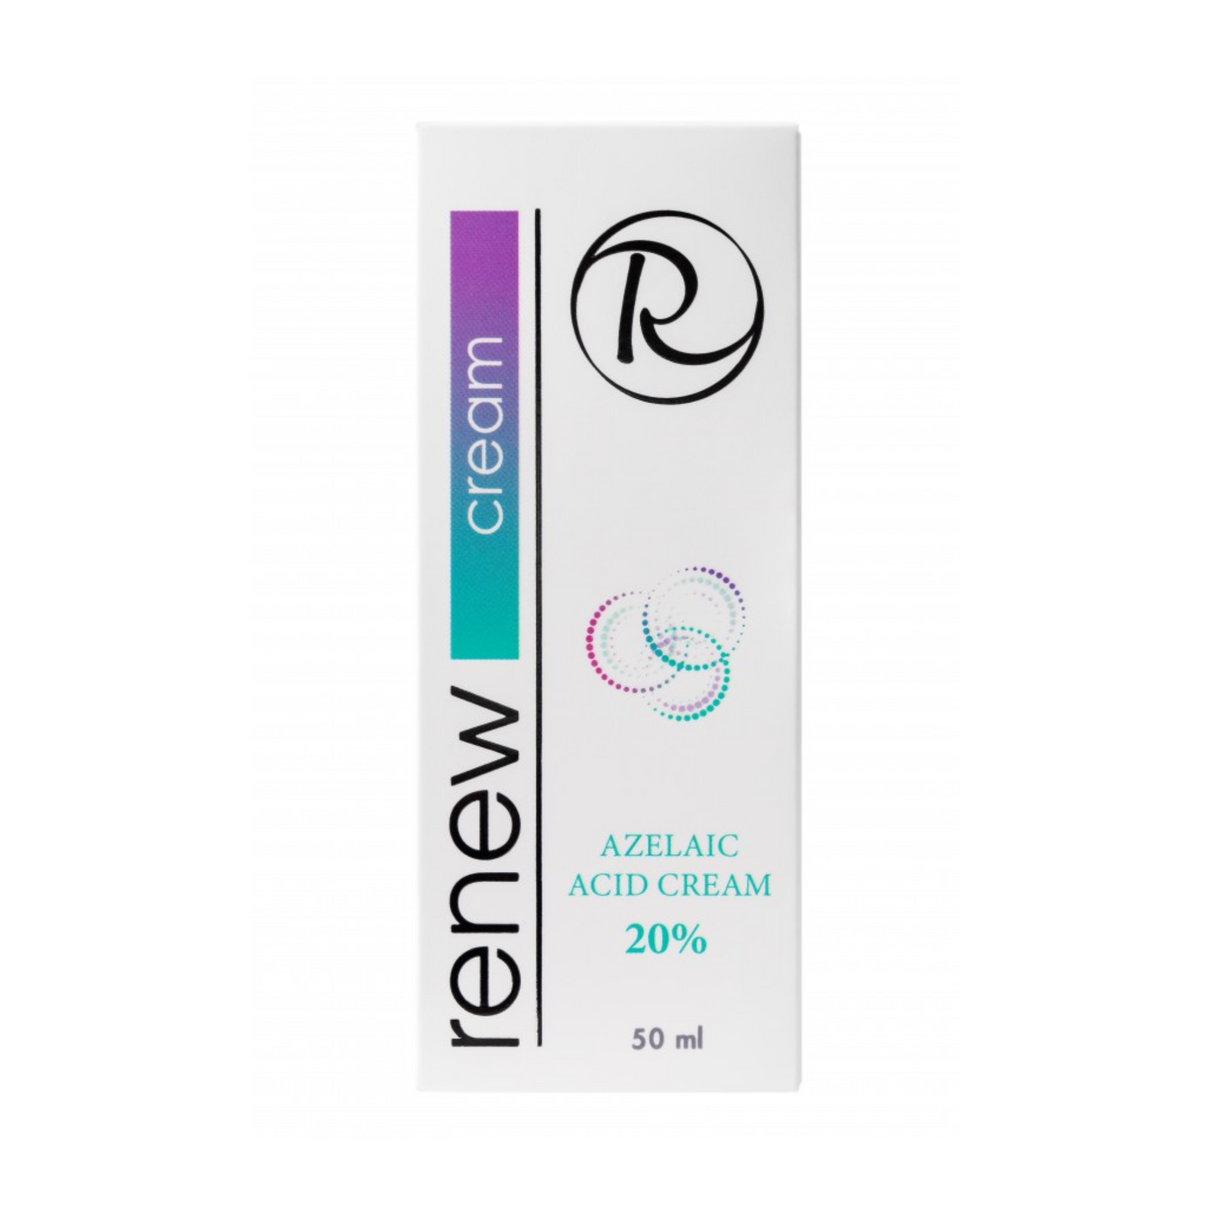 Renew Azelaic Acid Cream 20% - Cream with azelaic acid | 50 ml